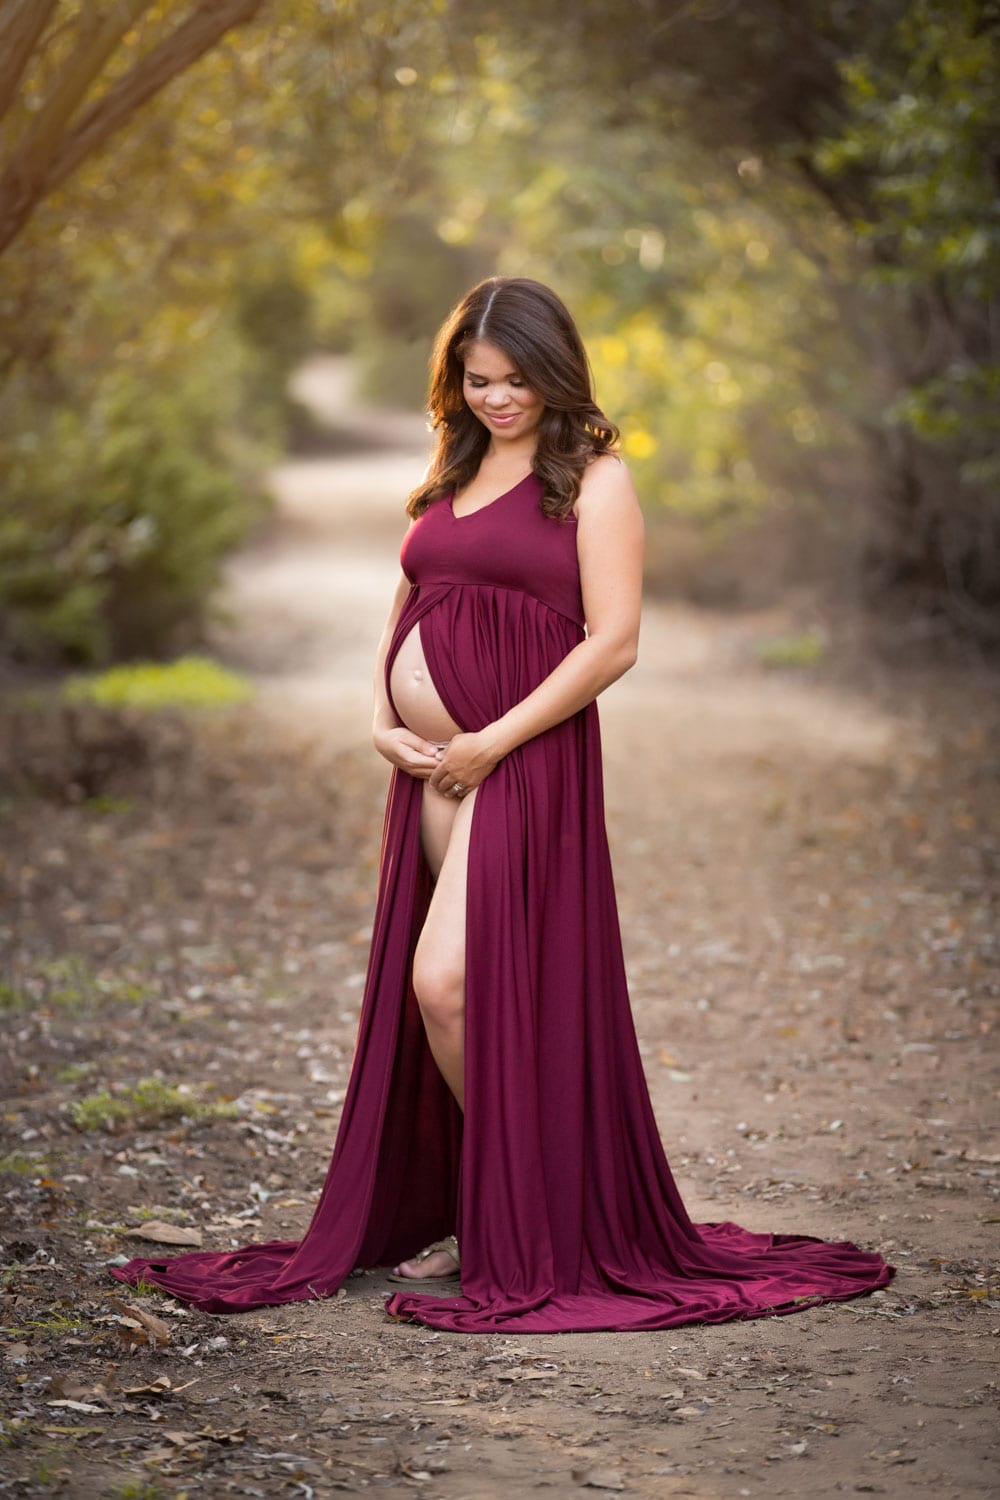 Portland_Maternity_Photographer_Gretchen_Barros_Photography_Maternity_Wine_Dress